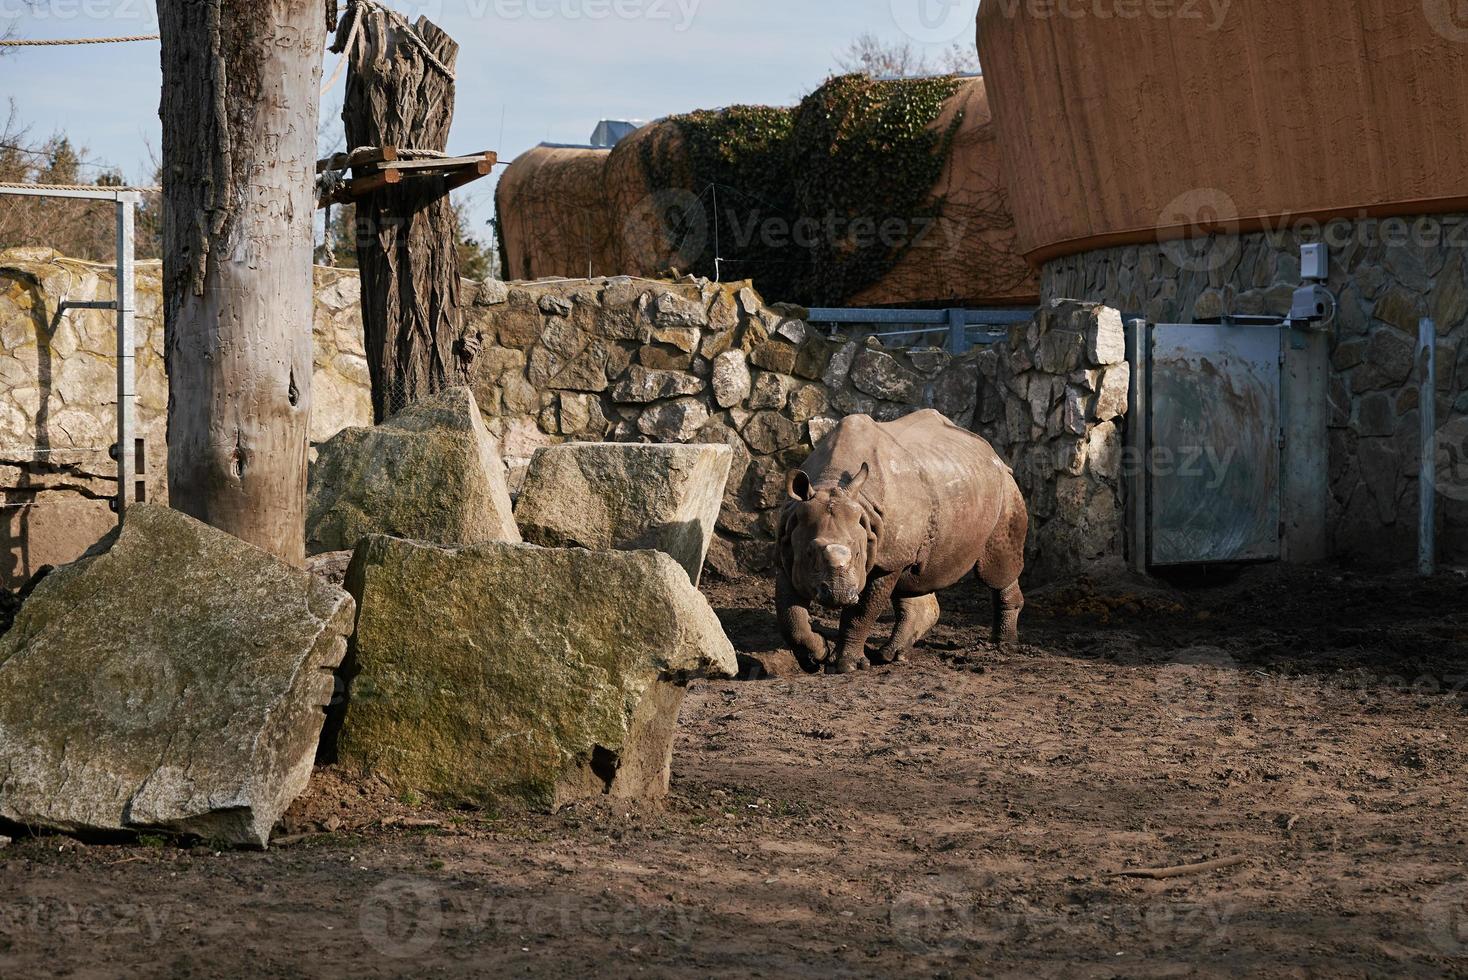 Indien rhinocéros dans zoo photo